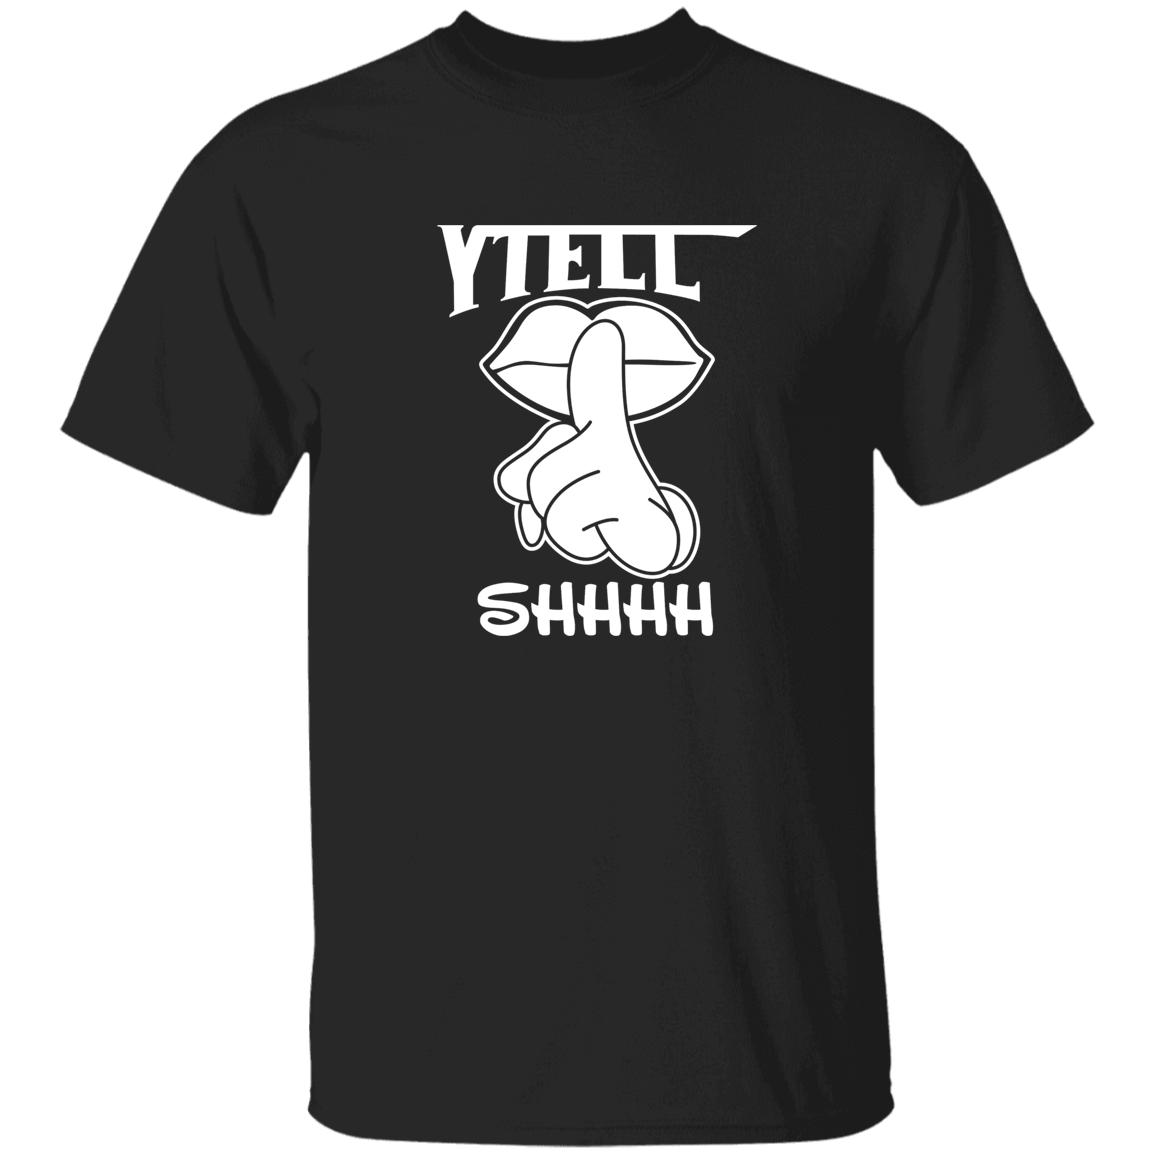 YTELL™ T-shirts